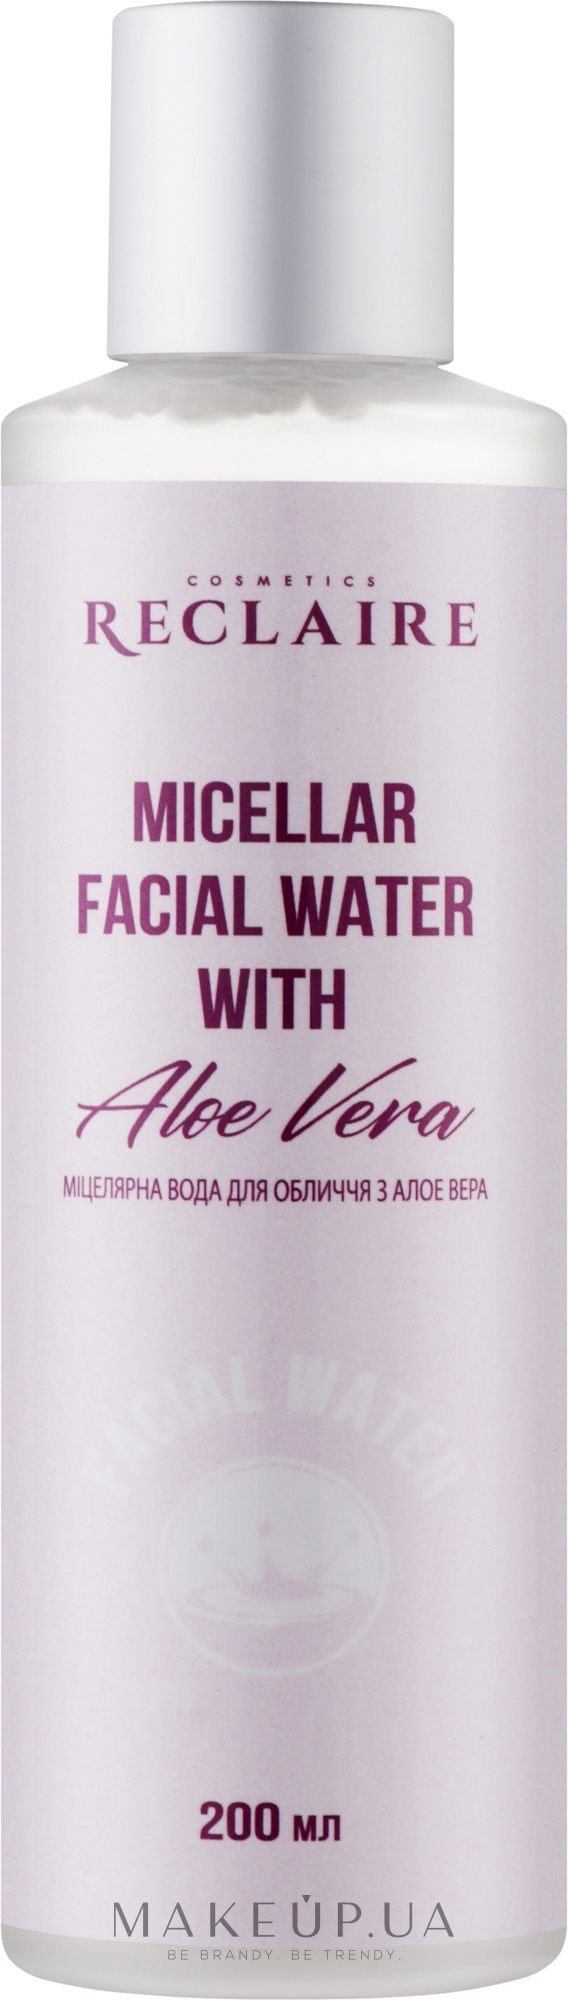 Міцелярна вода для обличчя з алое вера - Reclaire Micellar Facial Water With Aloe Vera — фото 200ml